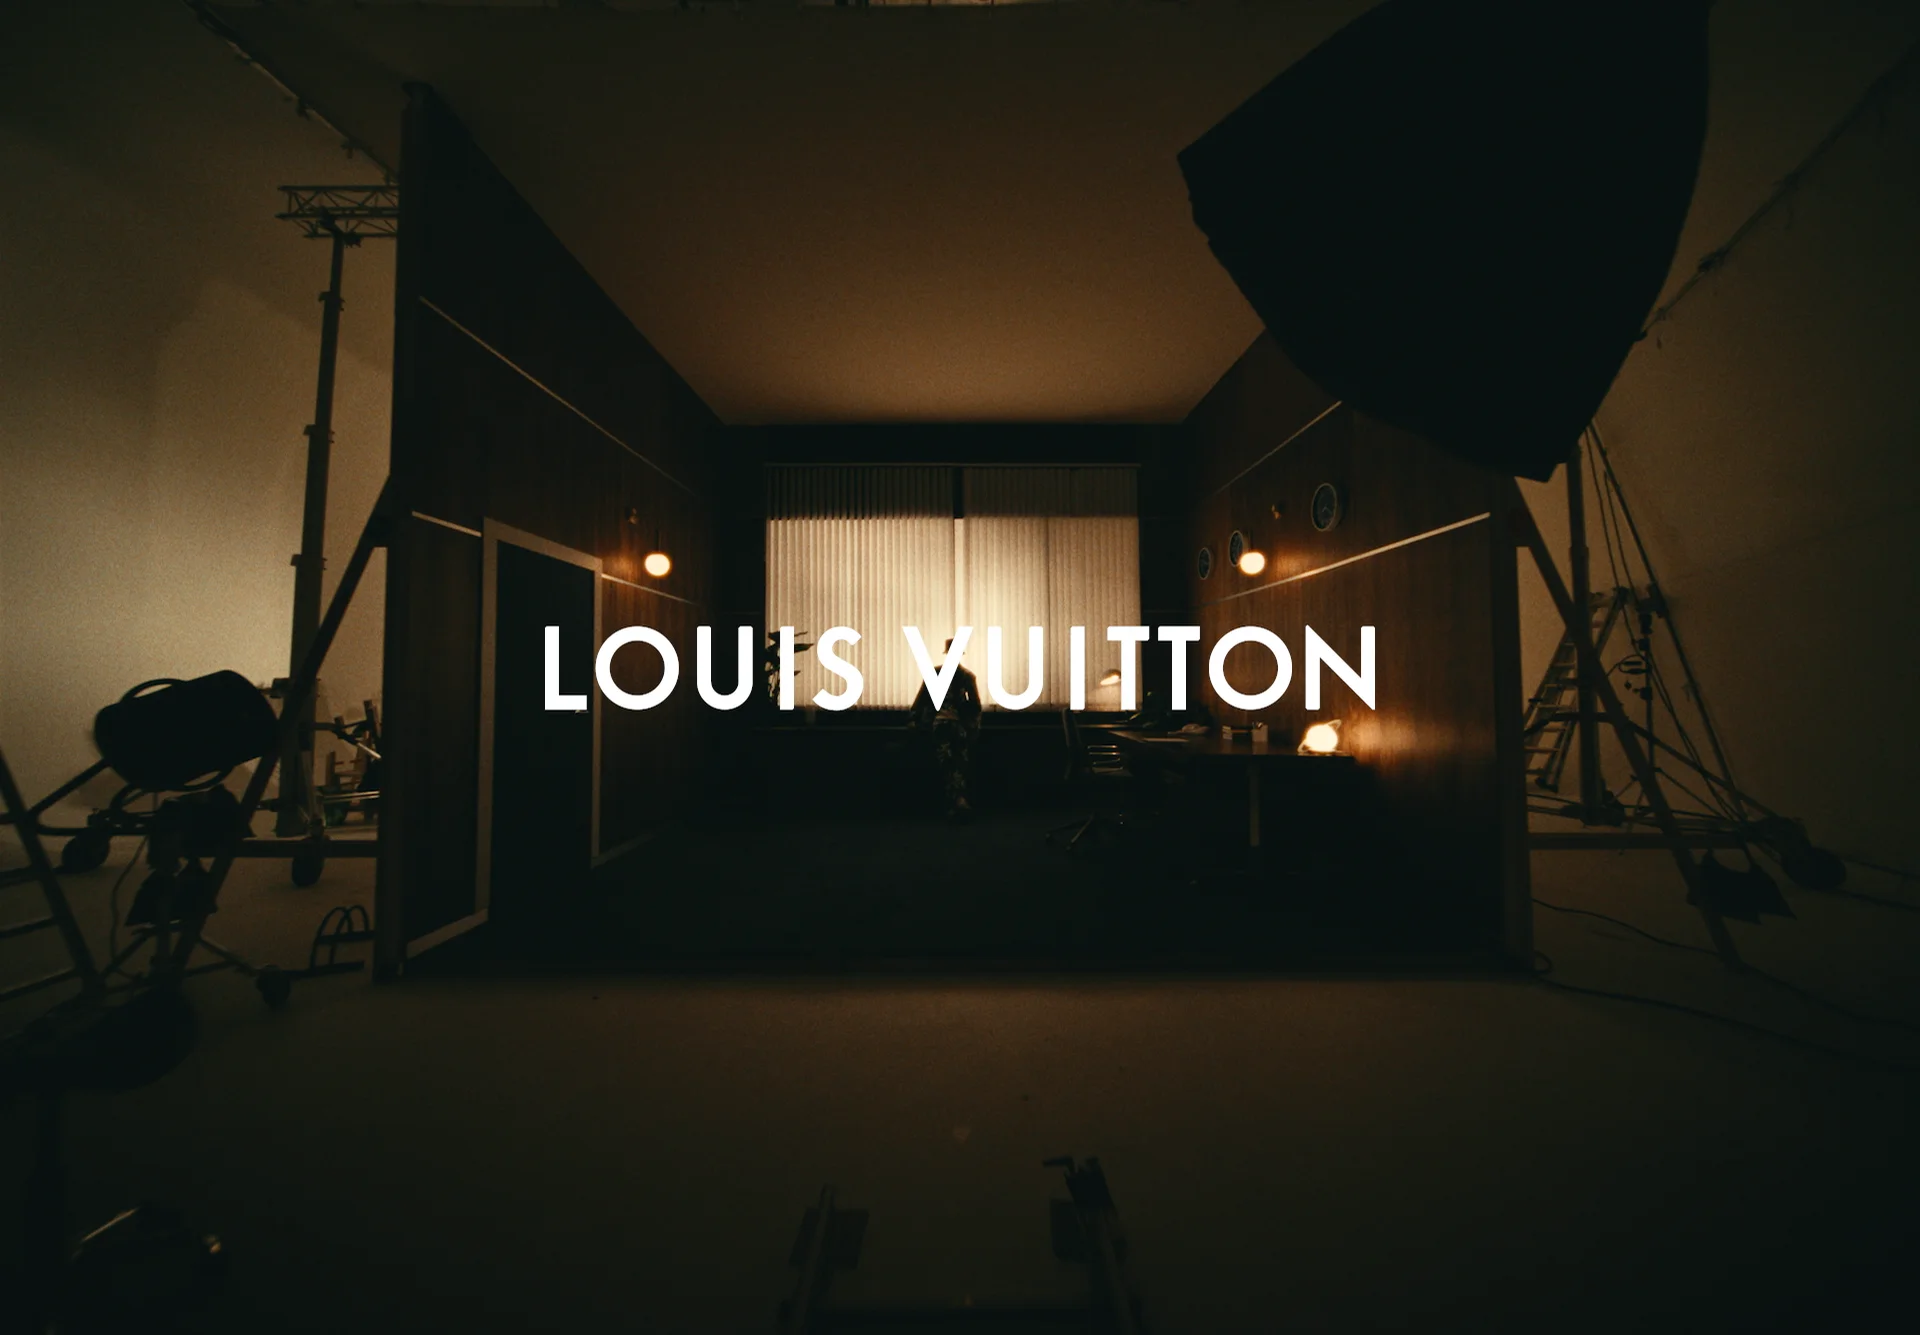 LOUIS VUITTON VELO CAMPAIGN on Vimeo